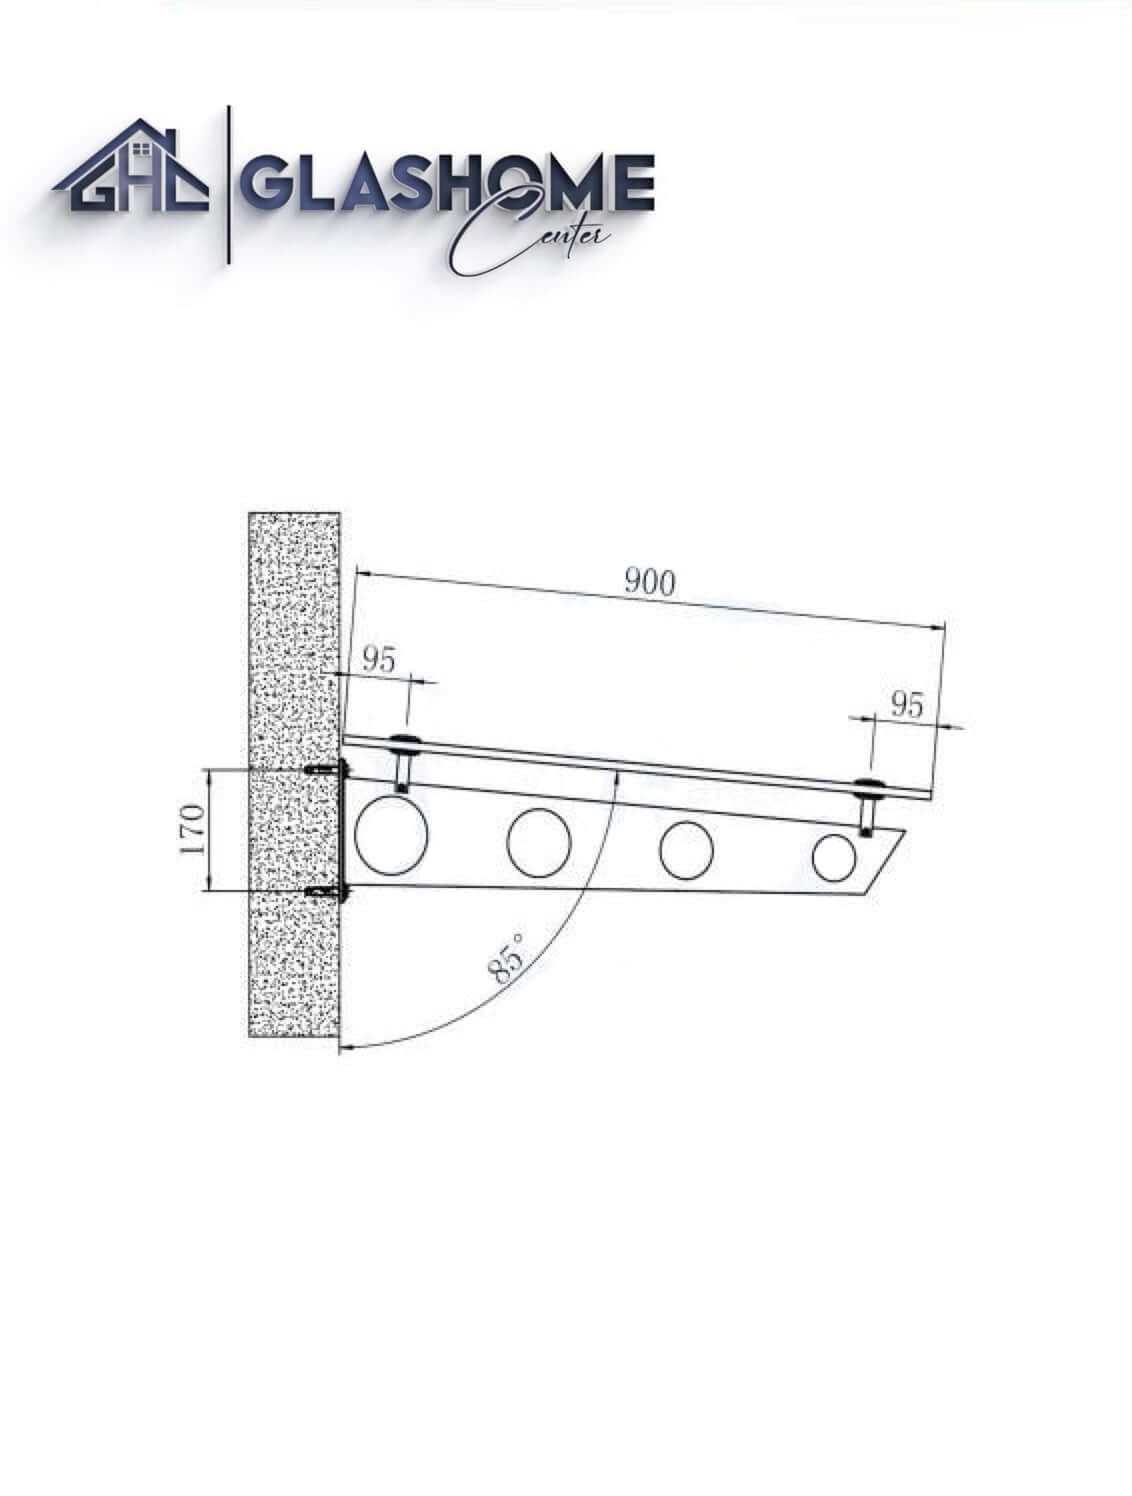 GlasHomeCenter - Glasvordach - Grauglas - 200x90cm - 13.1mm VSG - inkl. 3 Edelstahlhalterungen Variante "Stockholm"